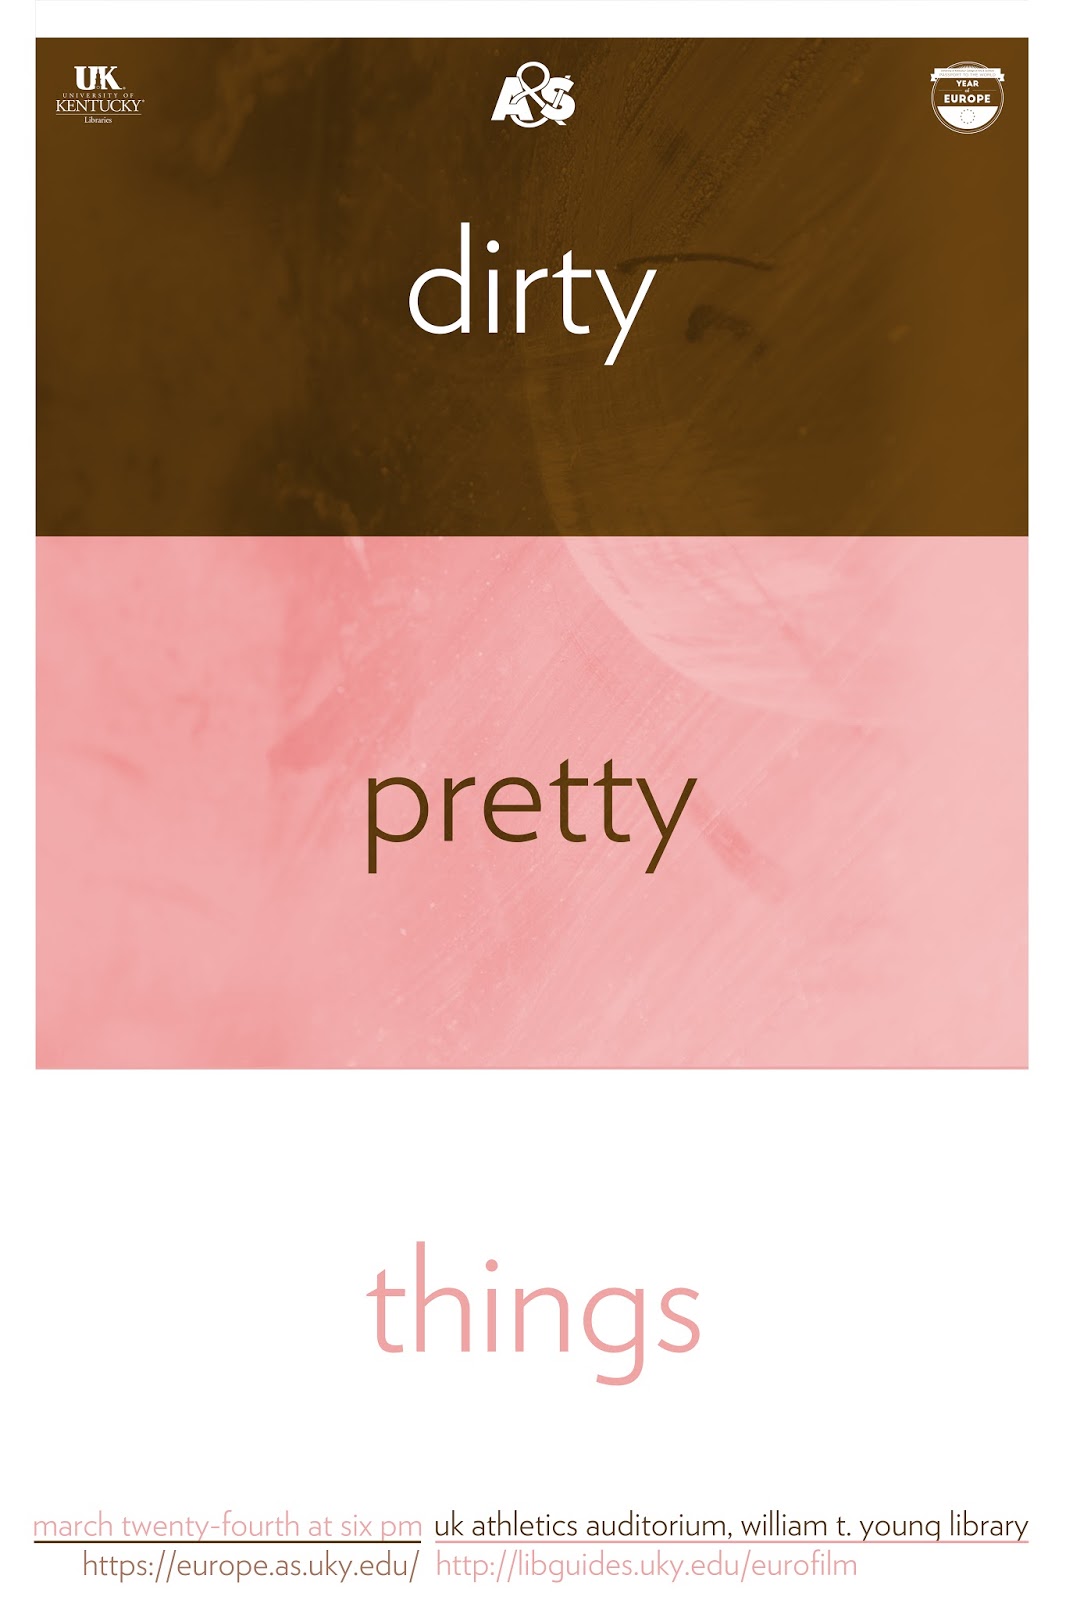 essay on dirty pretty things